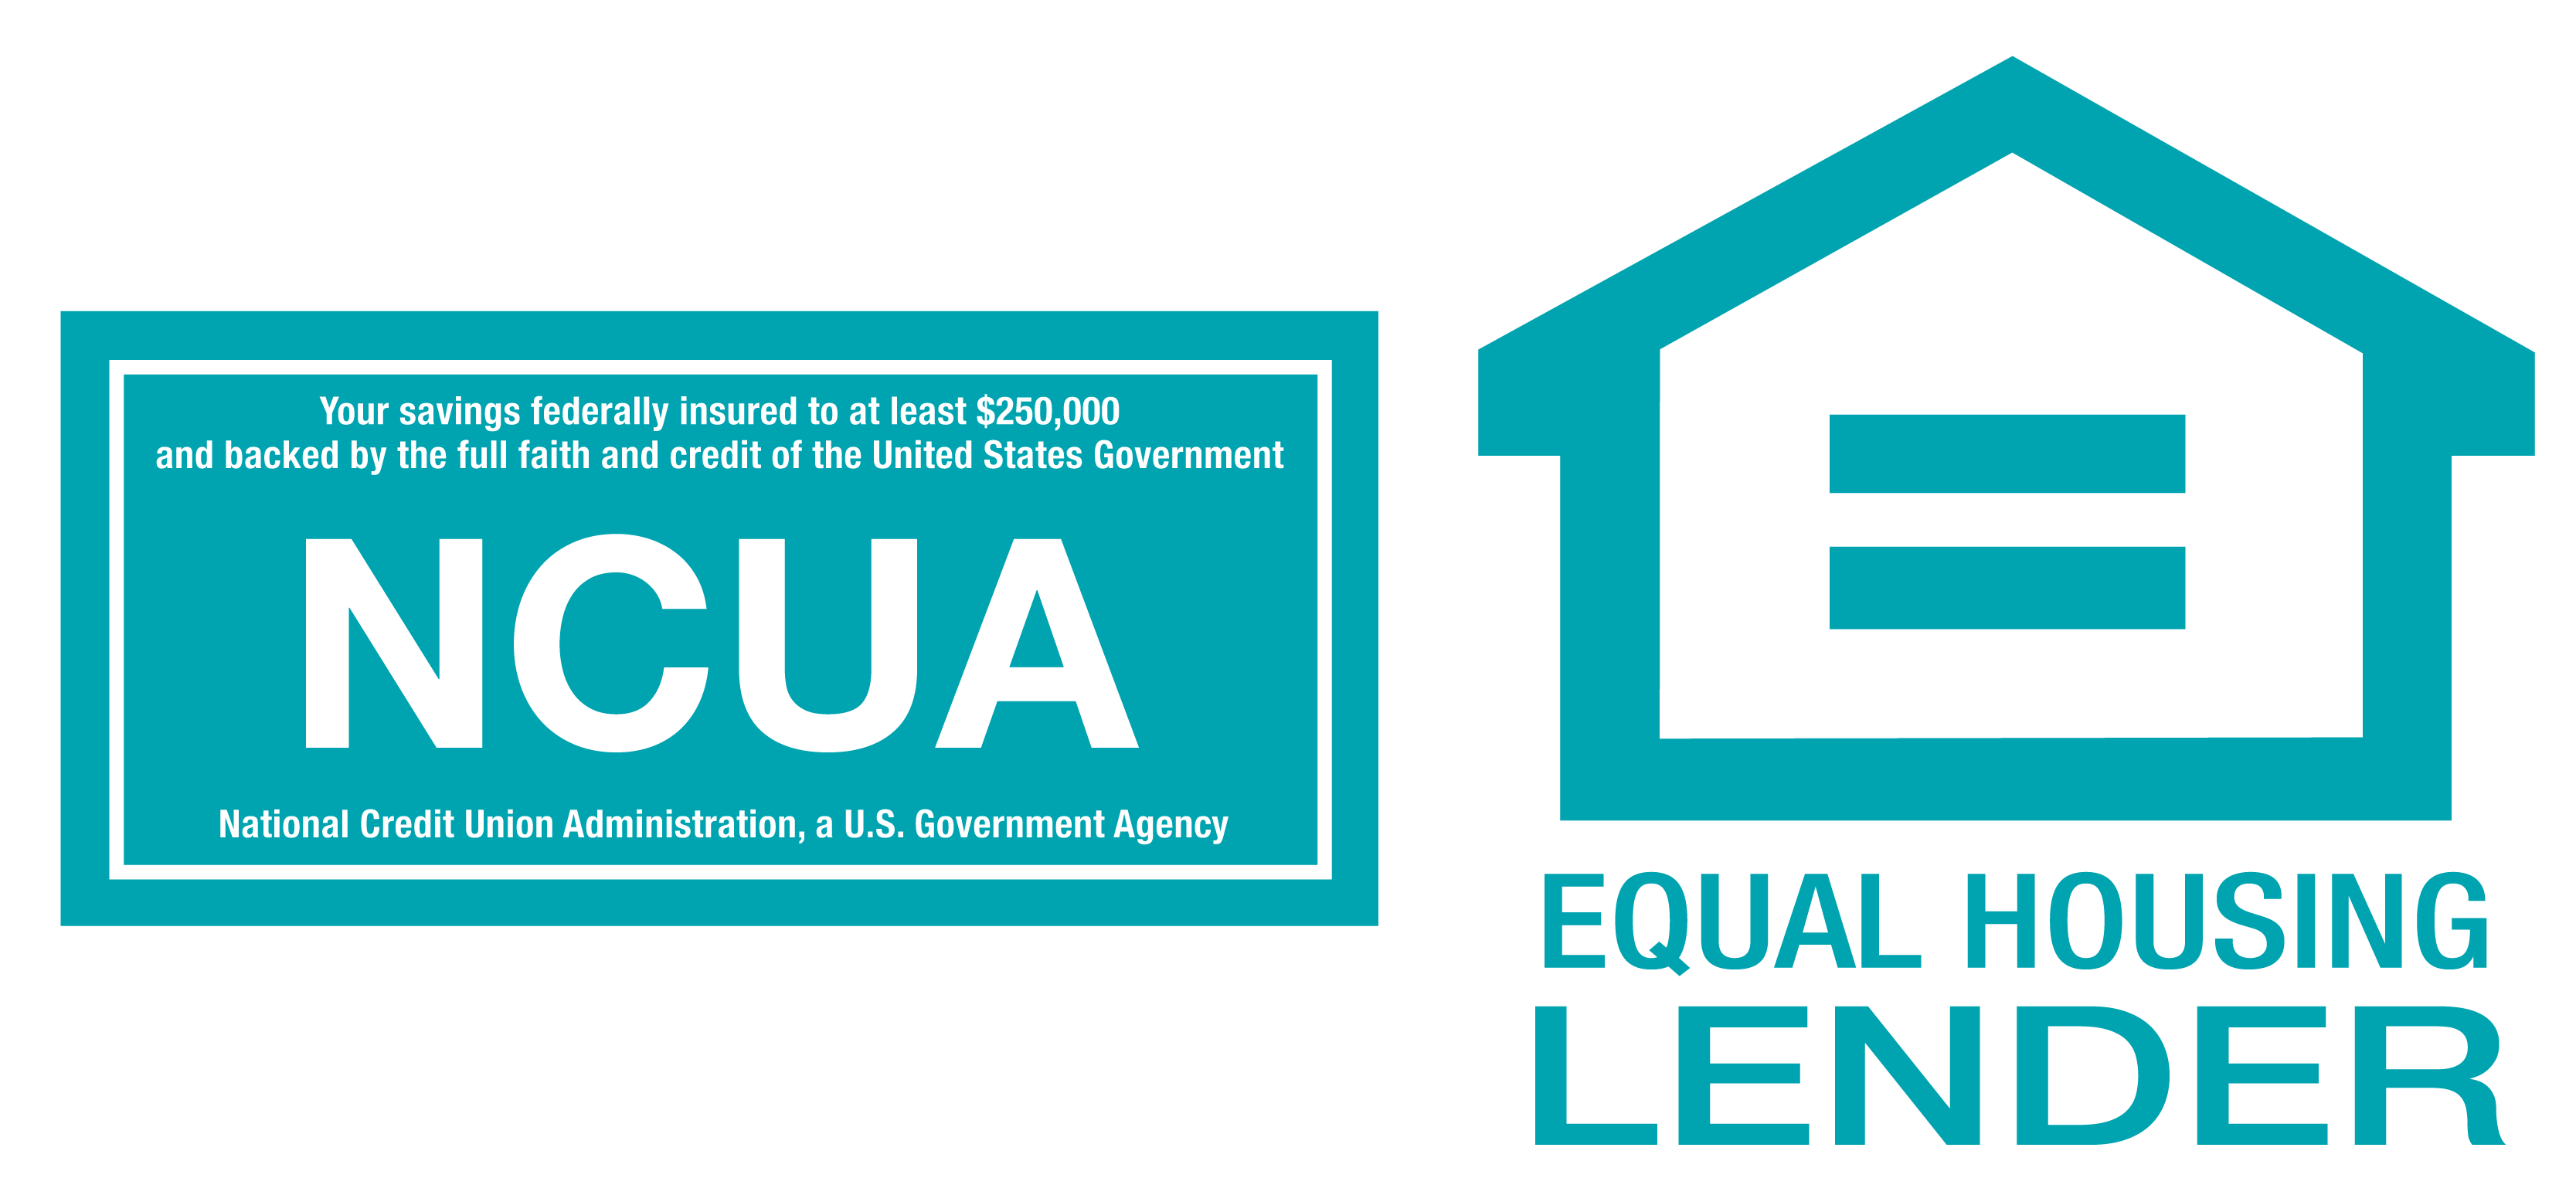 NCUA and Equal Housing Lender logos